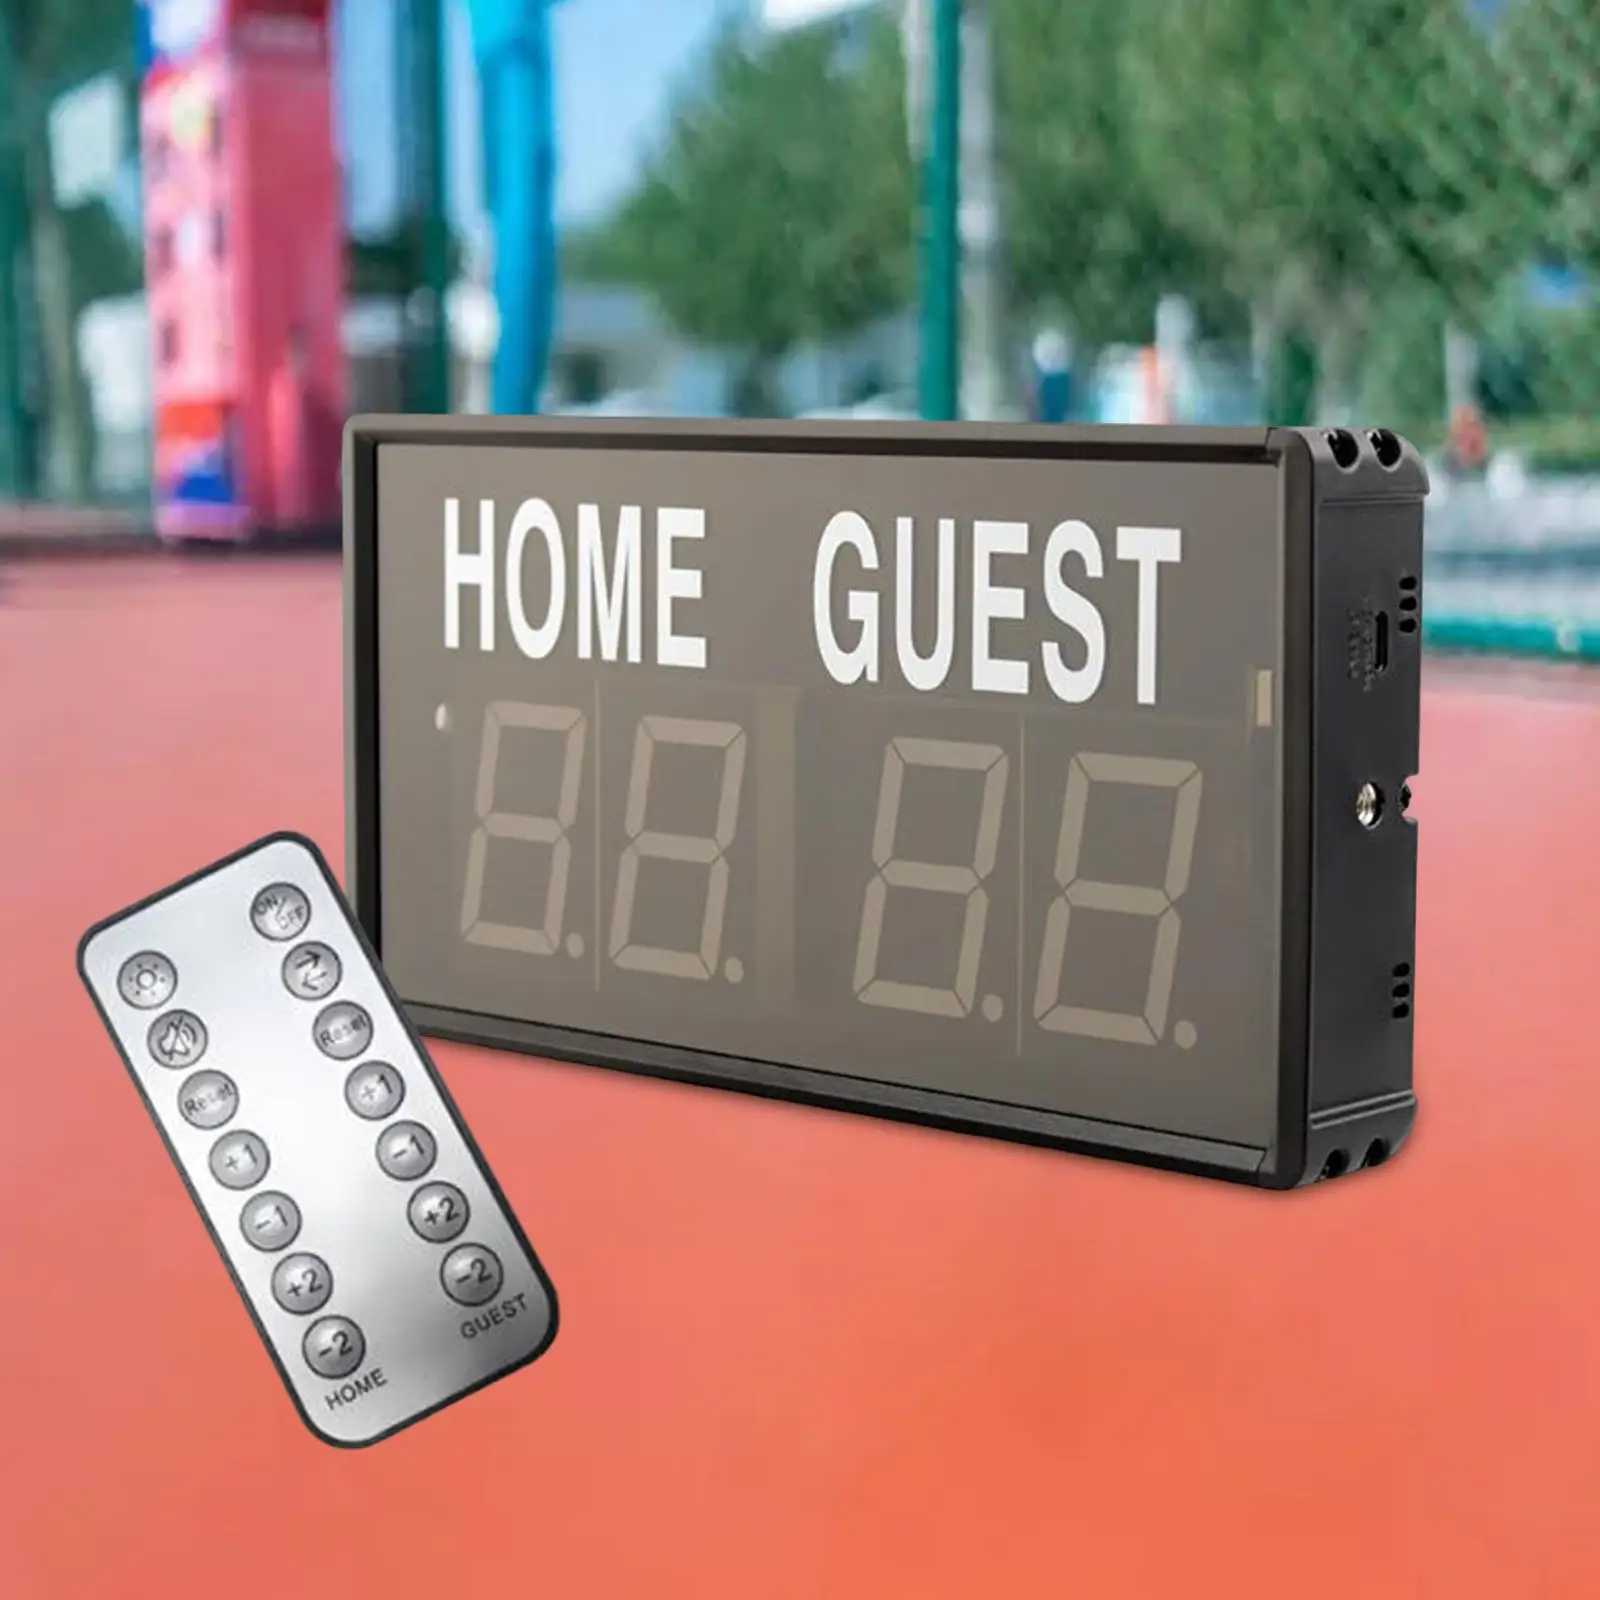 Digital Scoreboard LED Scoring Electronic Scoreboard Tabletop Score Keeper for Volleyball Badminton Indoor Games Soccer Sports